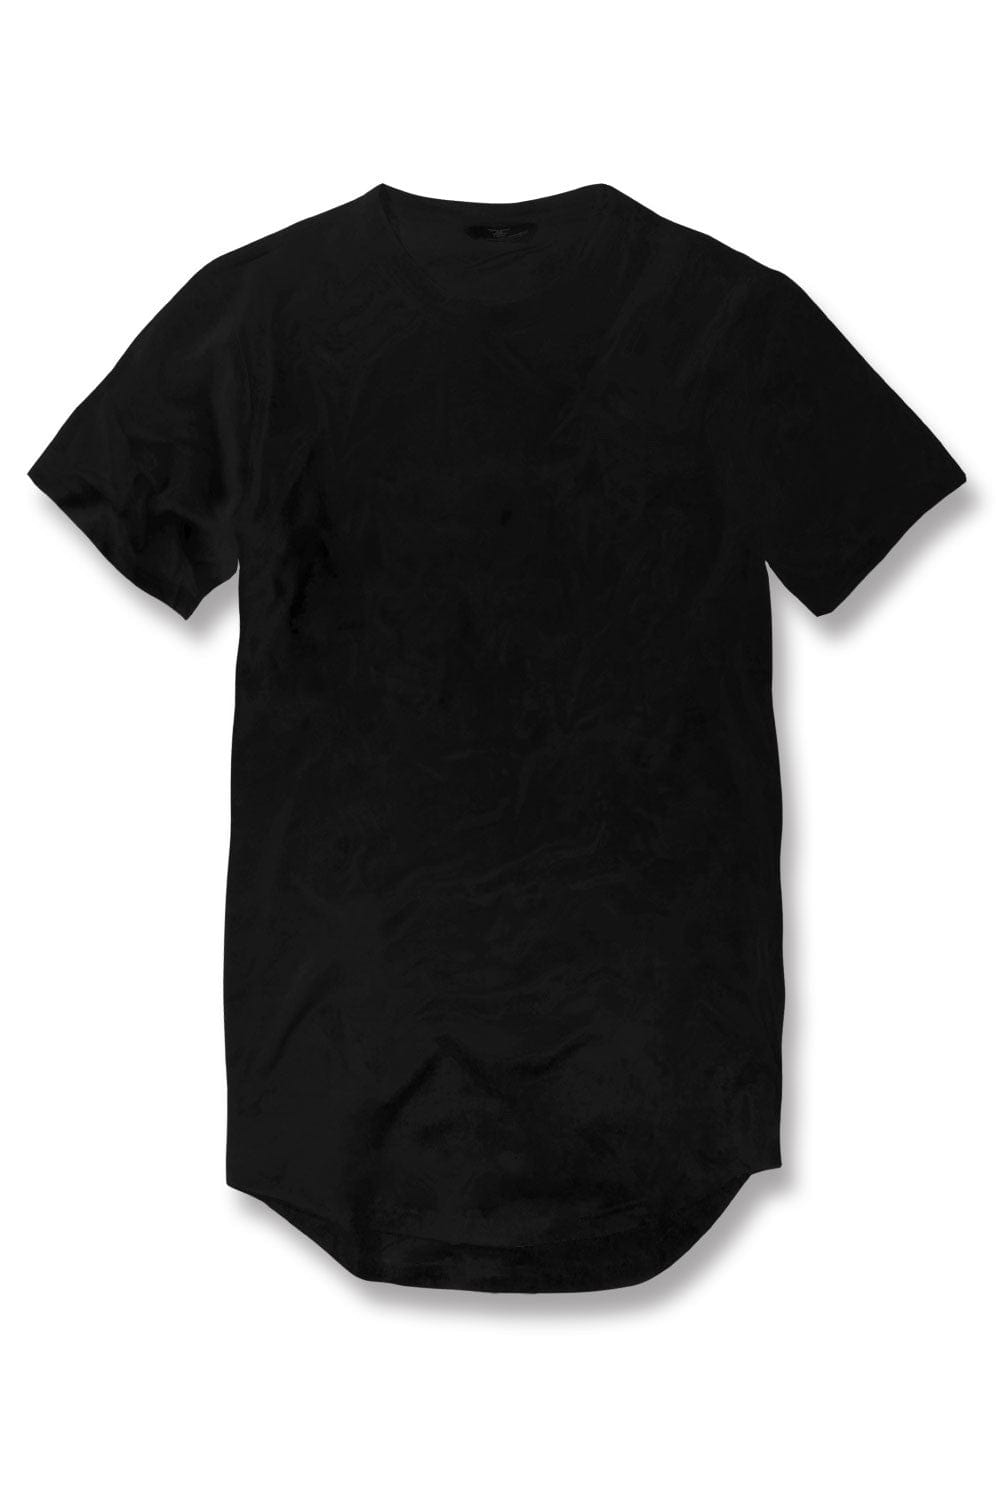 Jordan Craig Scallop T-Shirt (Name Your Price) S / Black